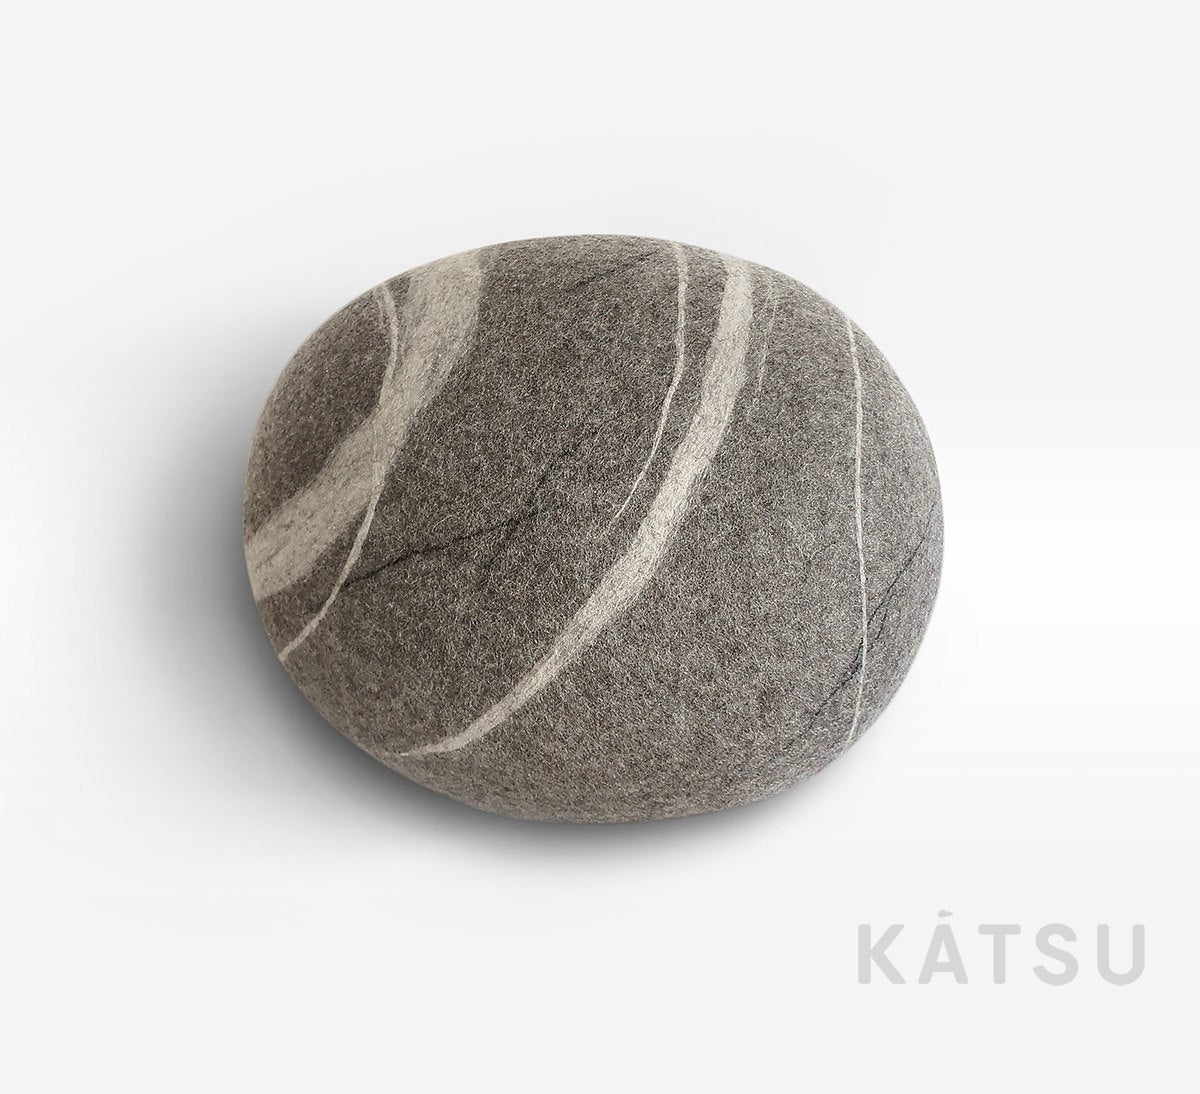 #Katsu #stones are so warm and cozy.
#softstones #design #miamidesign #miamidecore #miamidesigndistrict
#losangeles #usa #nature #sanfrancisco #la #pacific #sandiego #westcoast #losangelesdesign #ladesigner